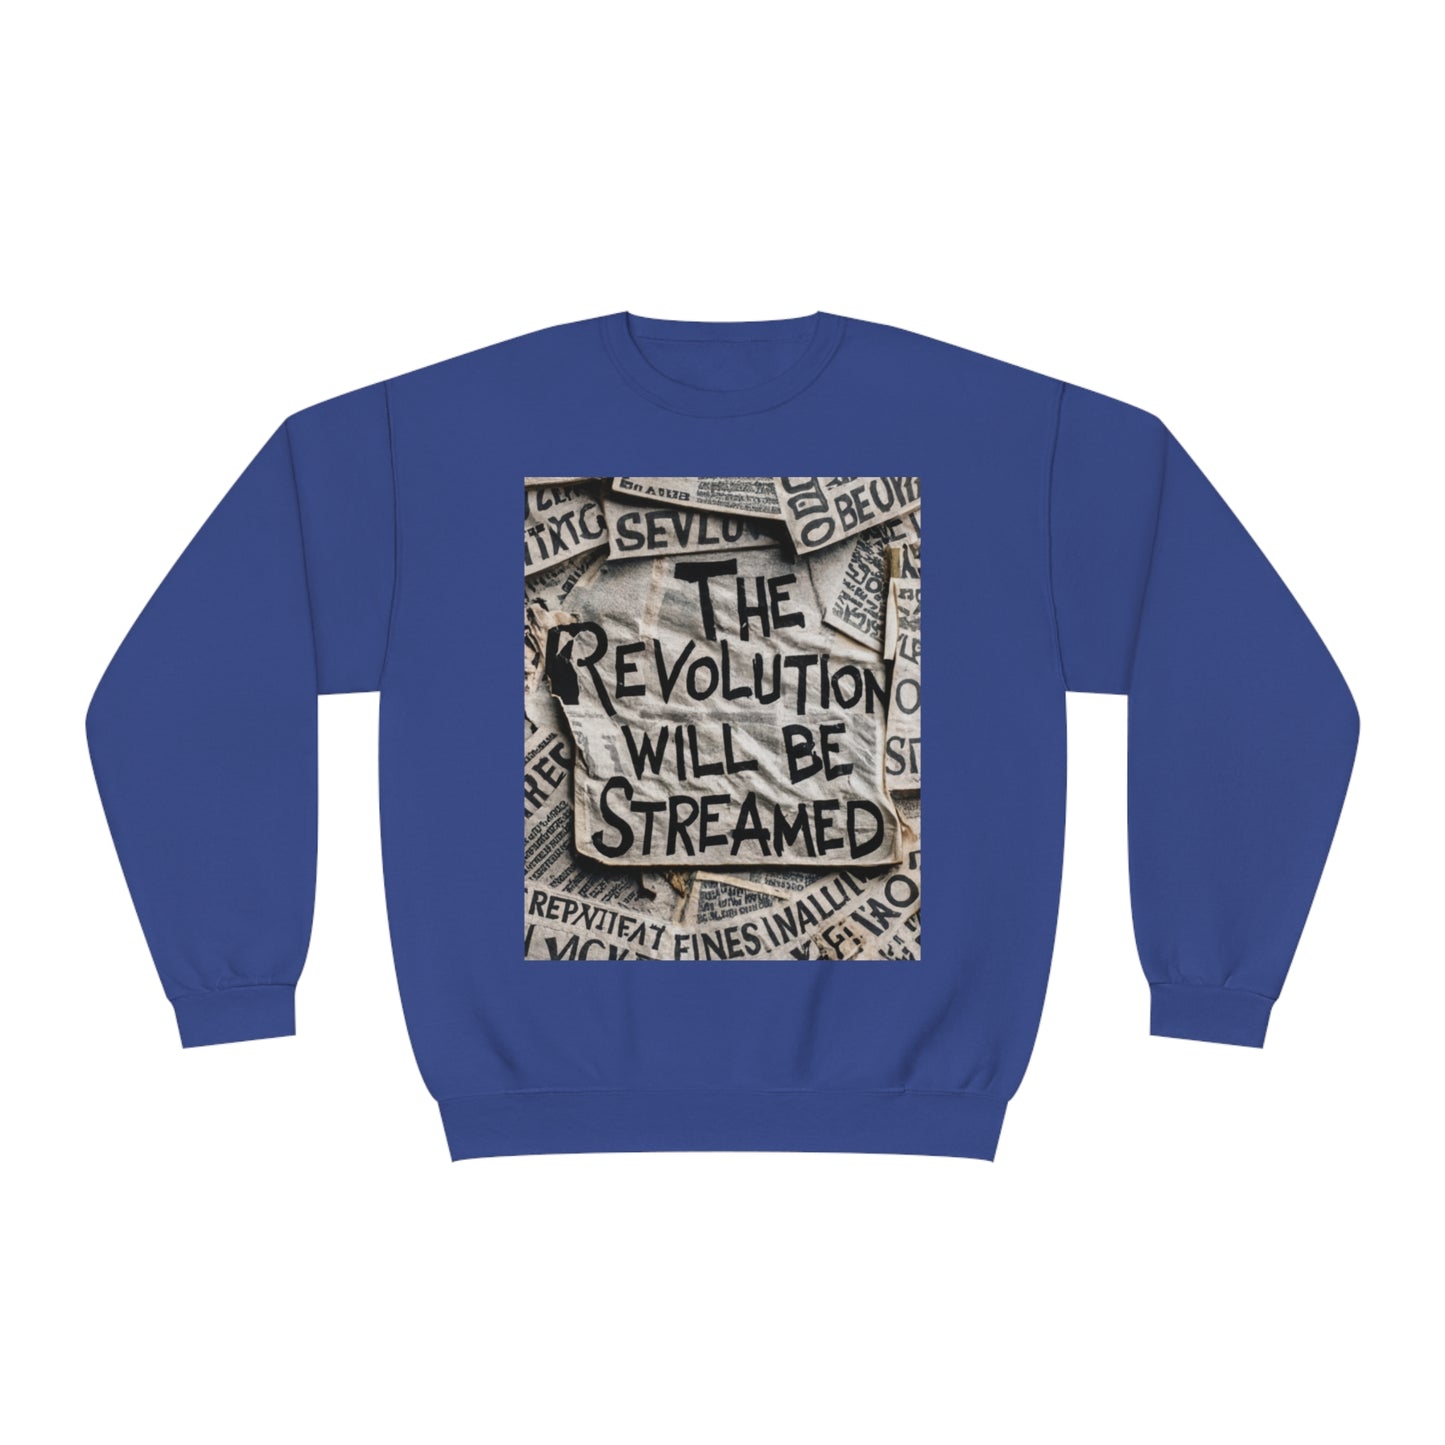 The Revolution will be televised - Sweatshirt